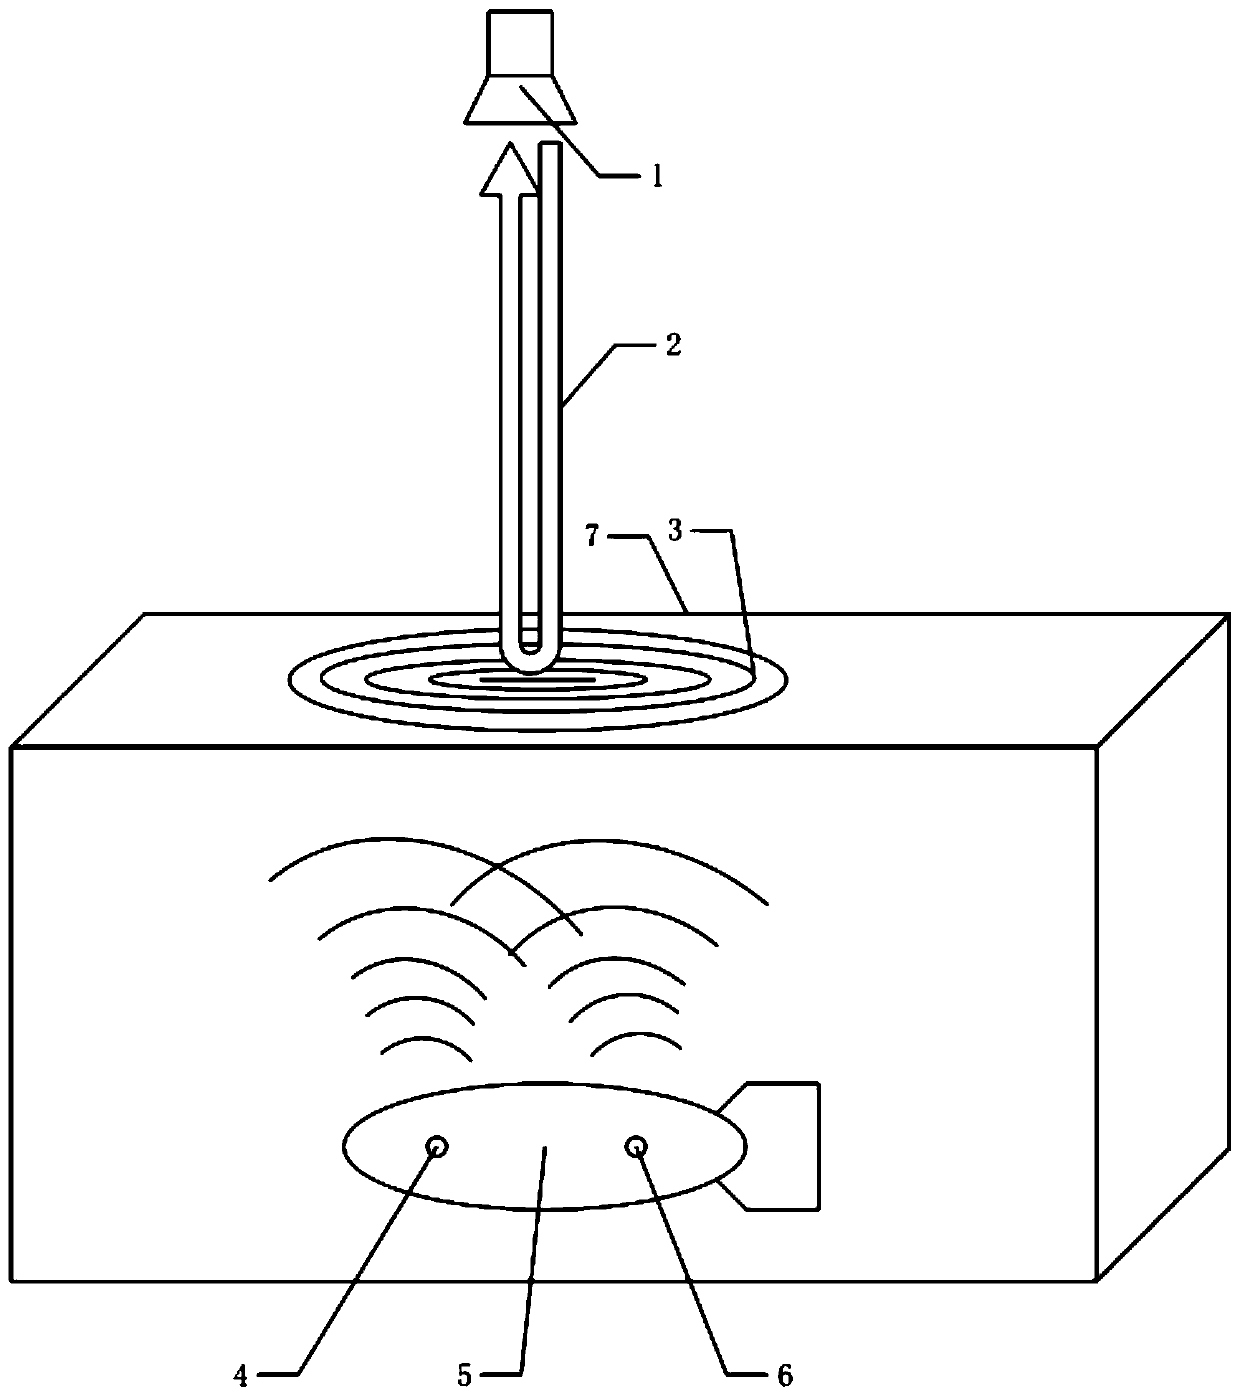 Acoustic-optical-based cross-medium covert communication system and method